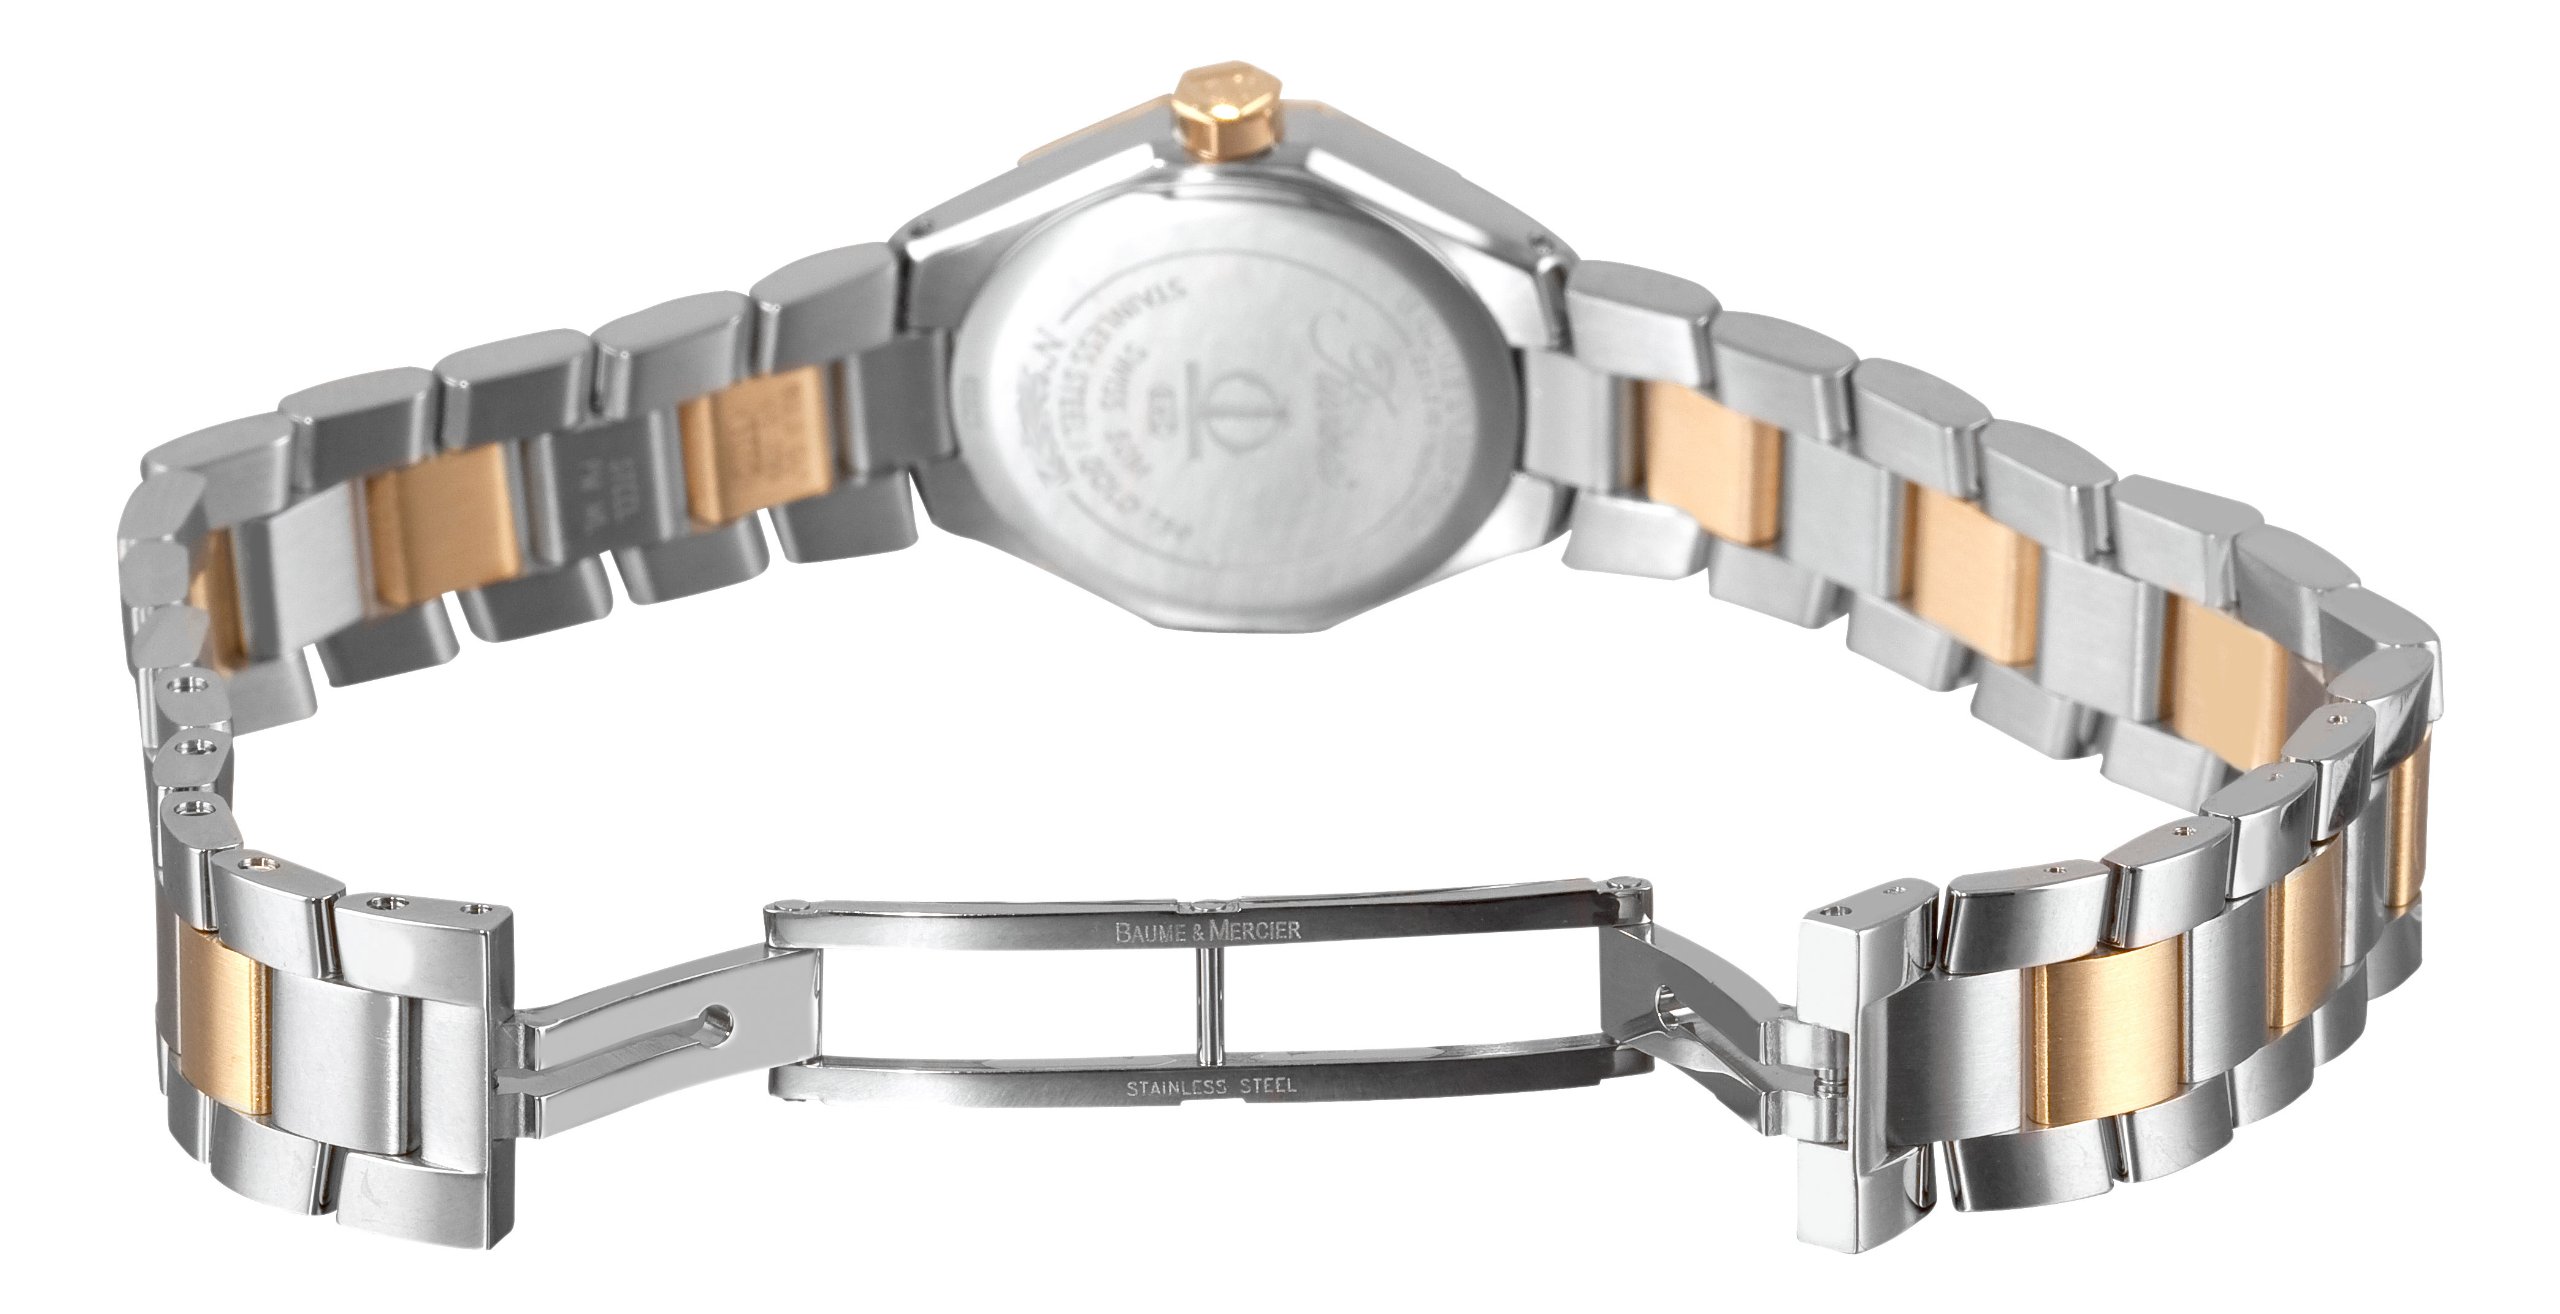 Baume & Mercier Women's 8762 Riviera XS Two-Tone Gold Dial Watch